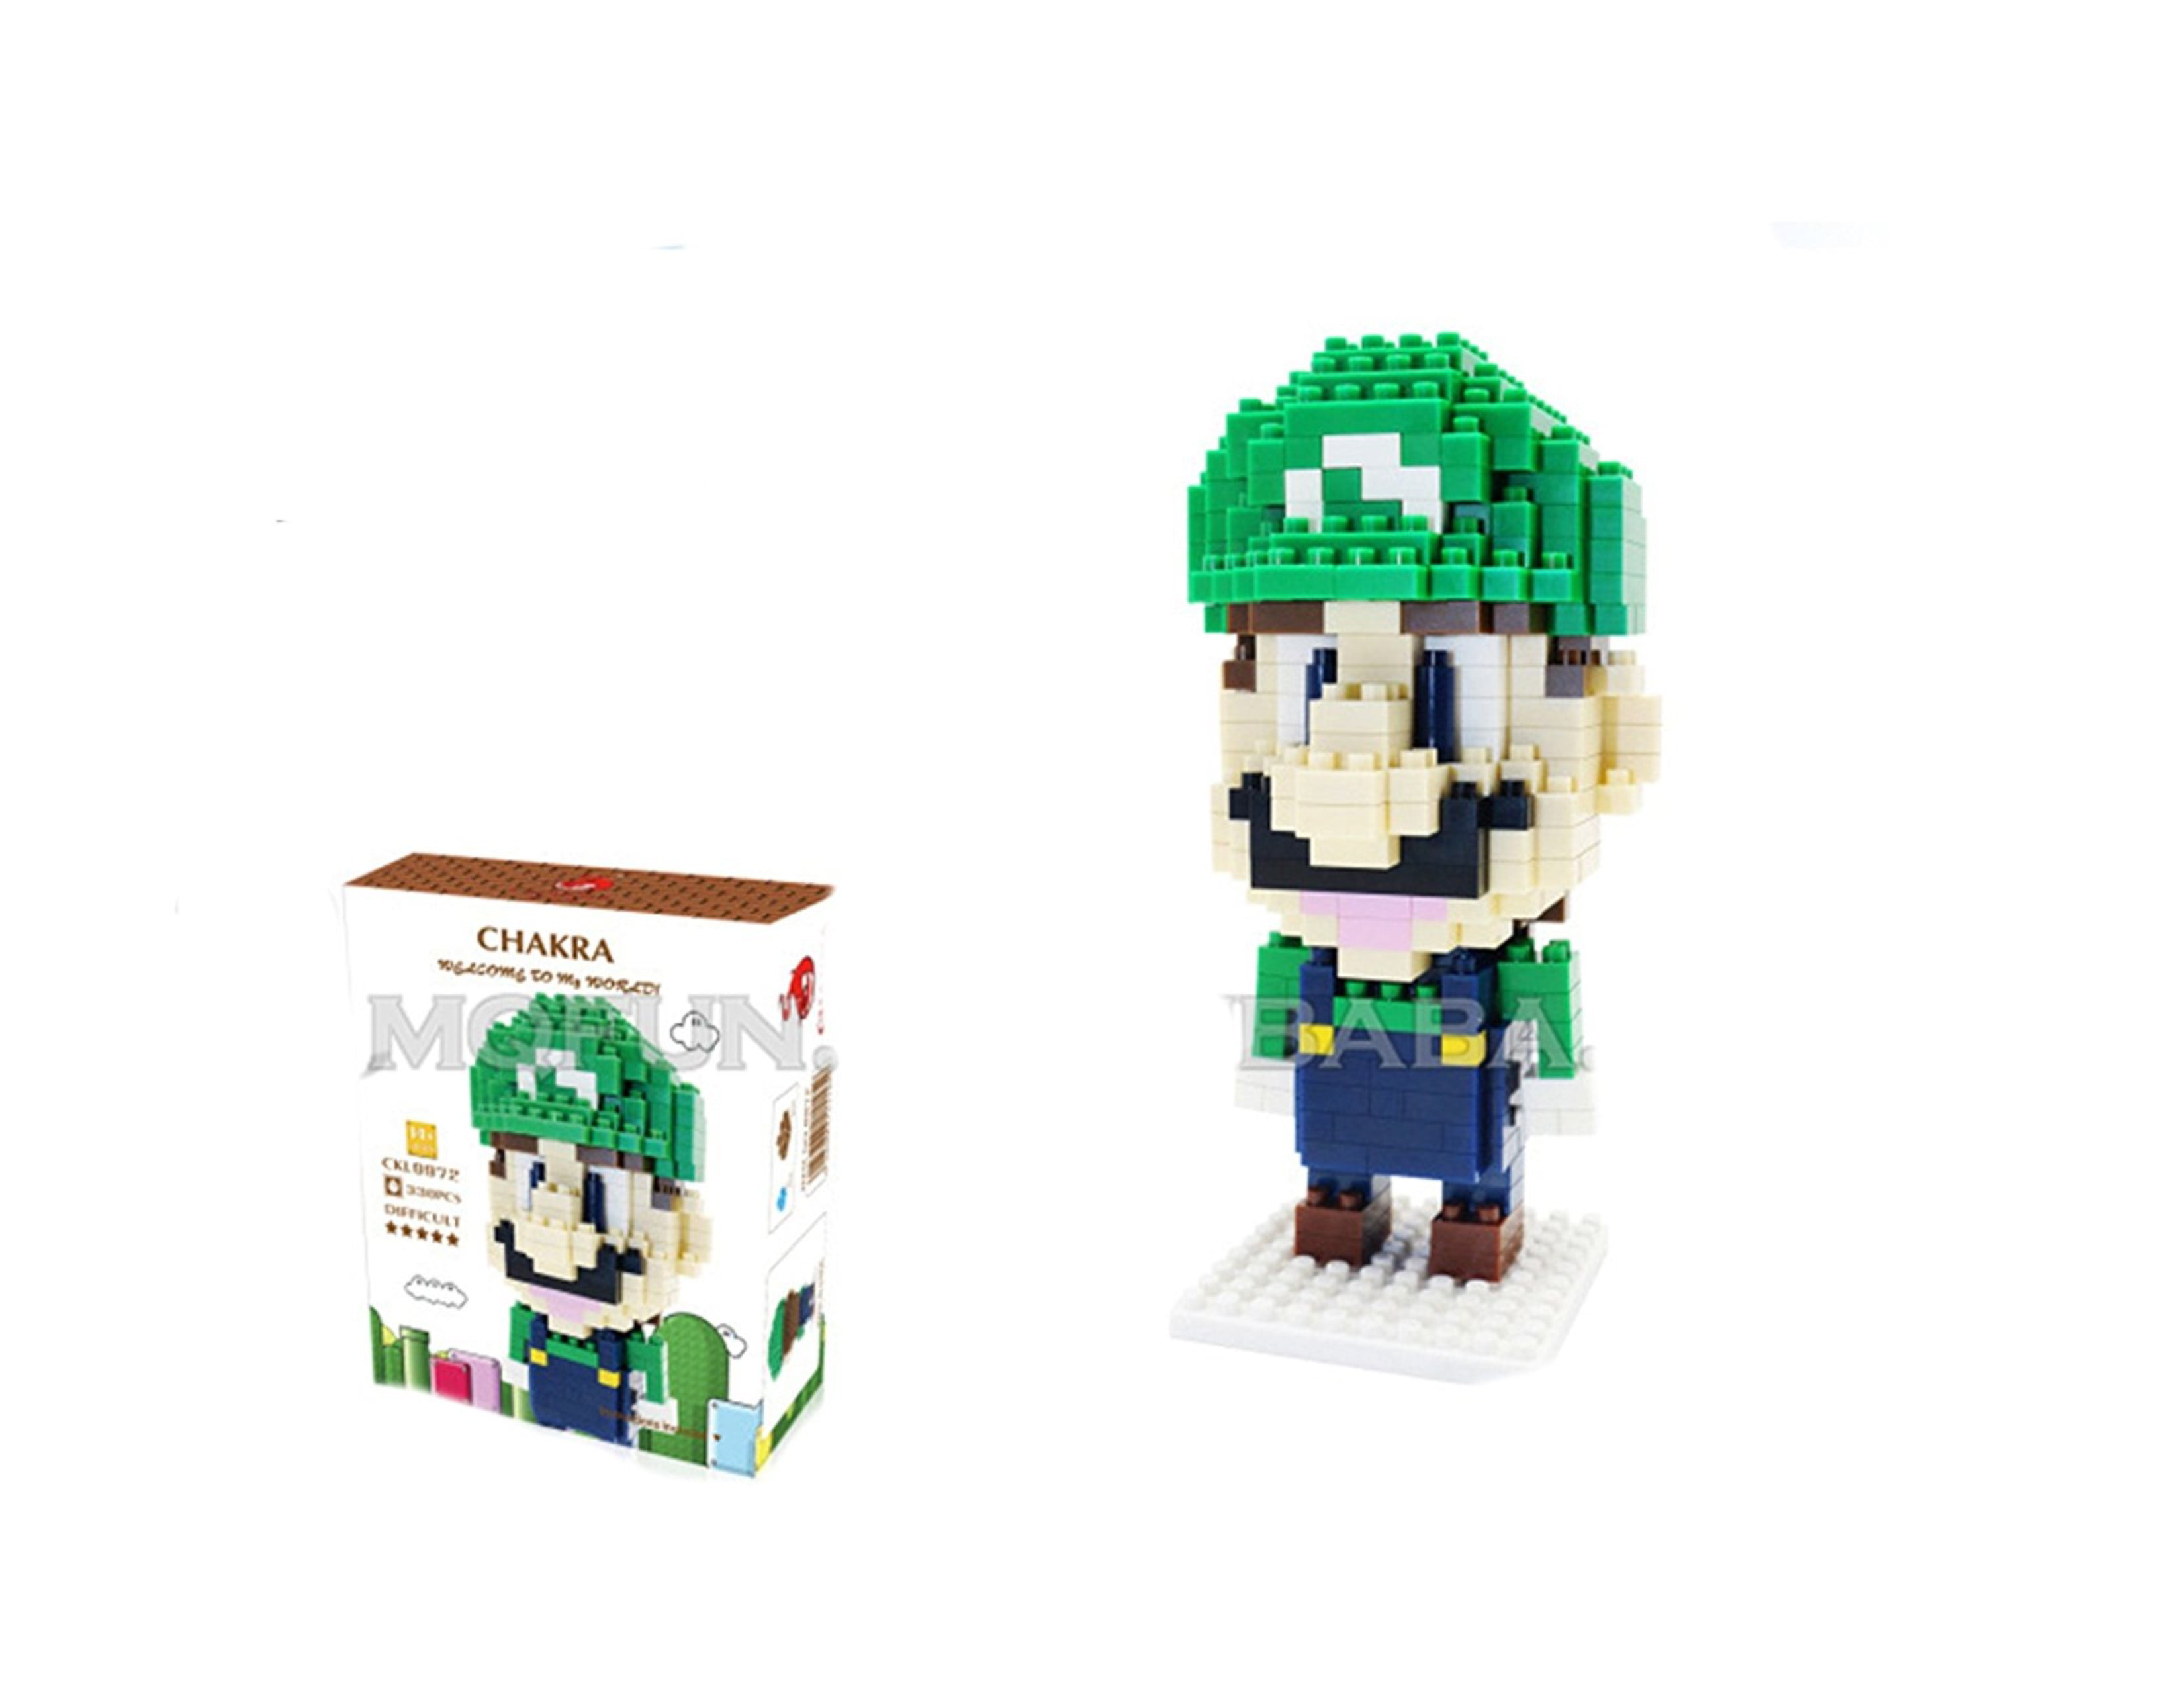 Mario Luigi Building Blocks Video Game Figurine Man Helmet Gift Toy 